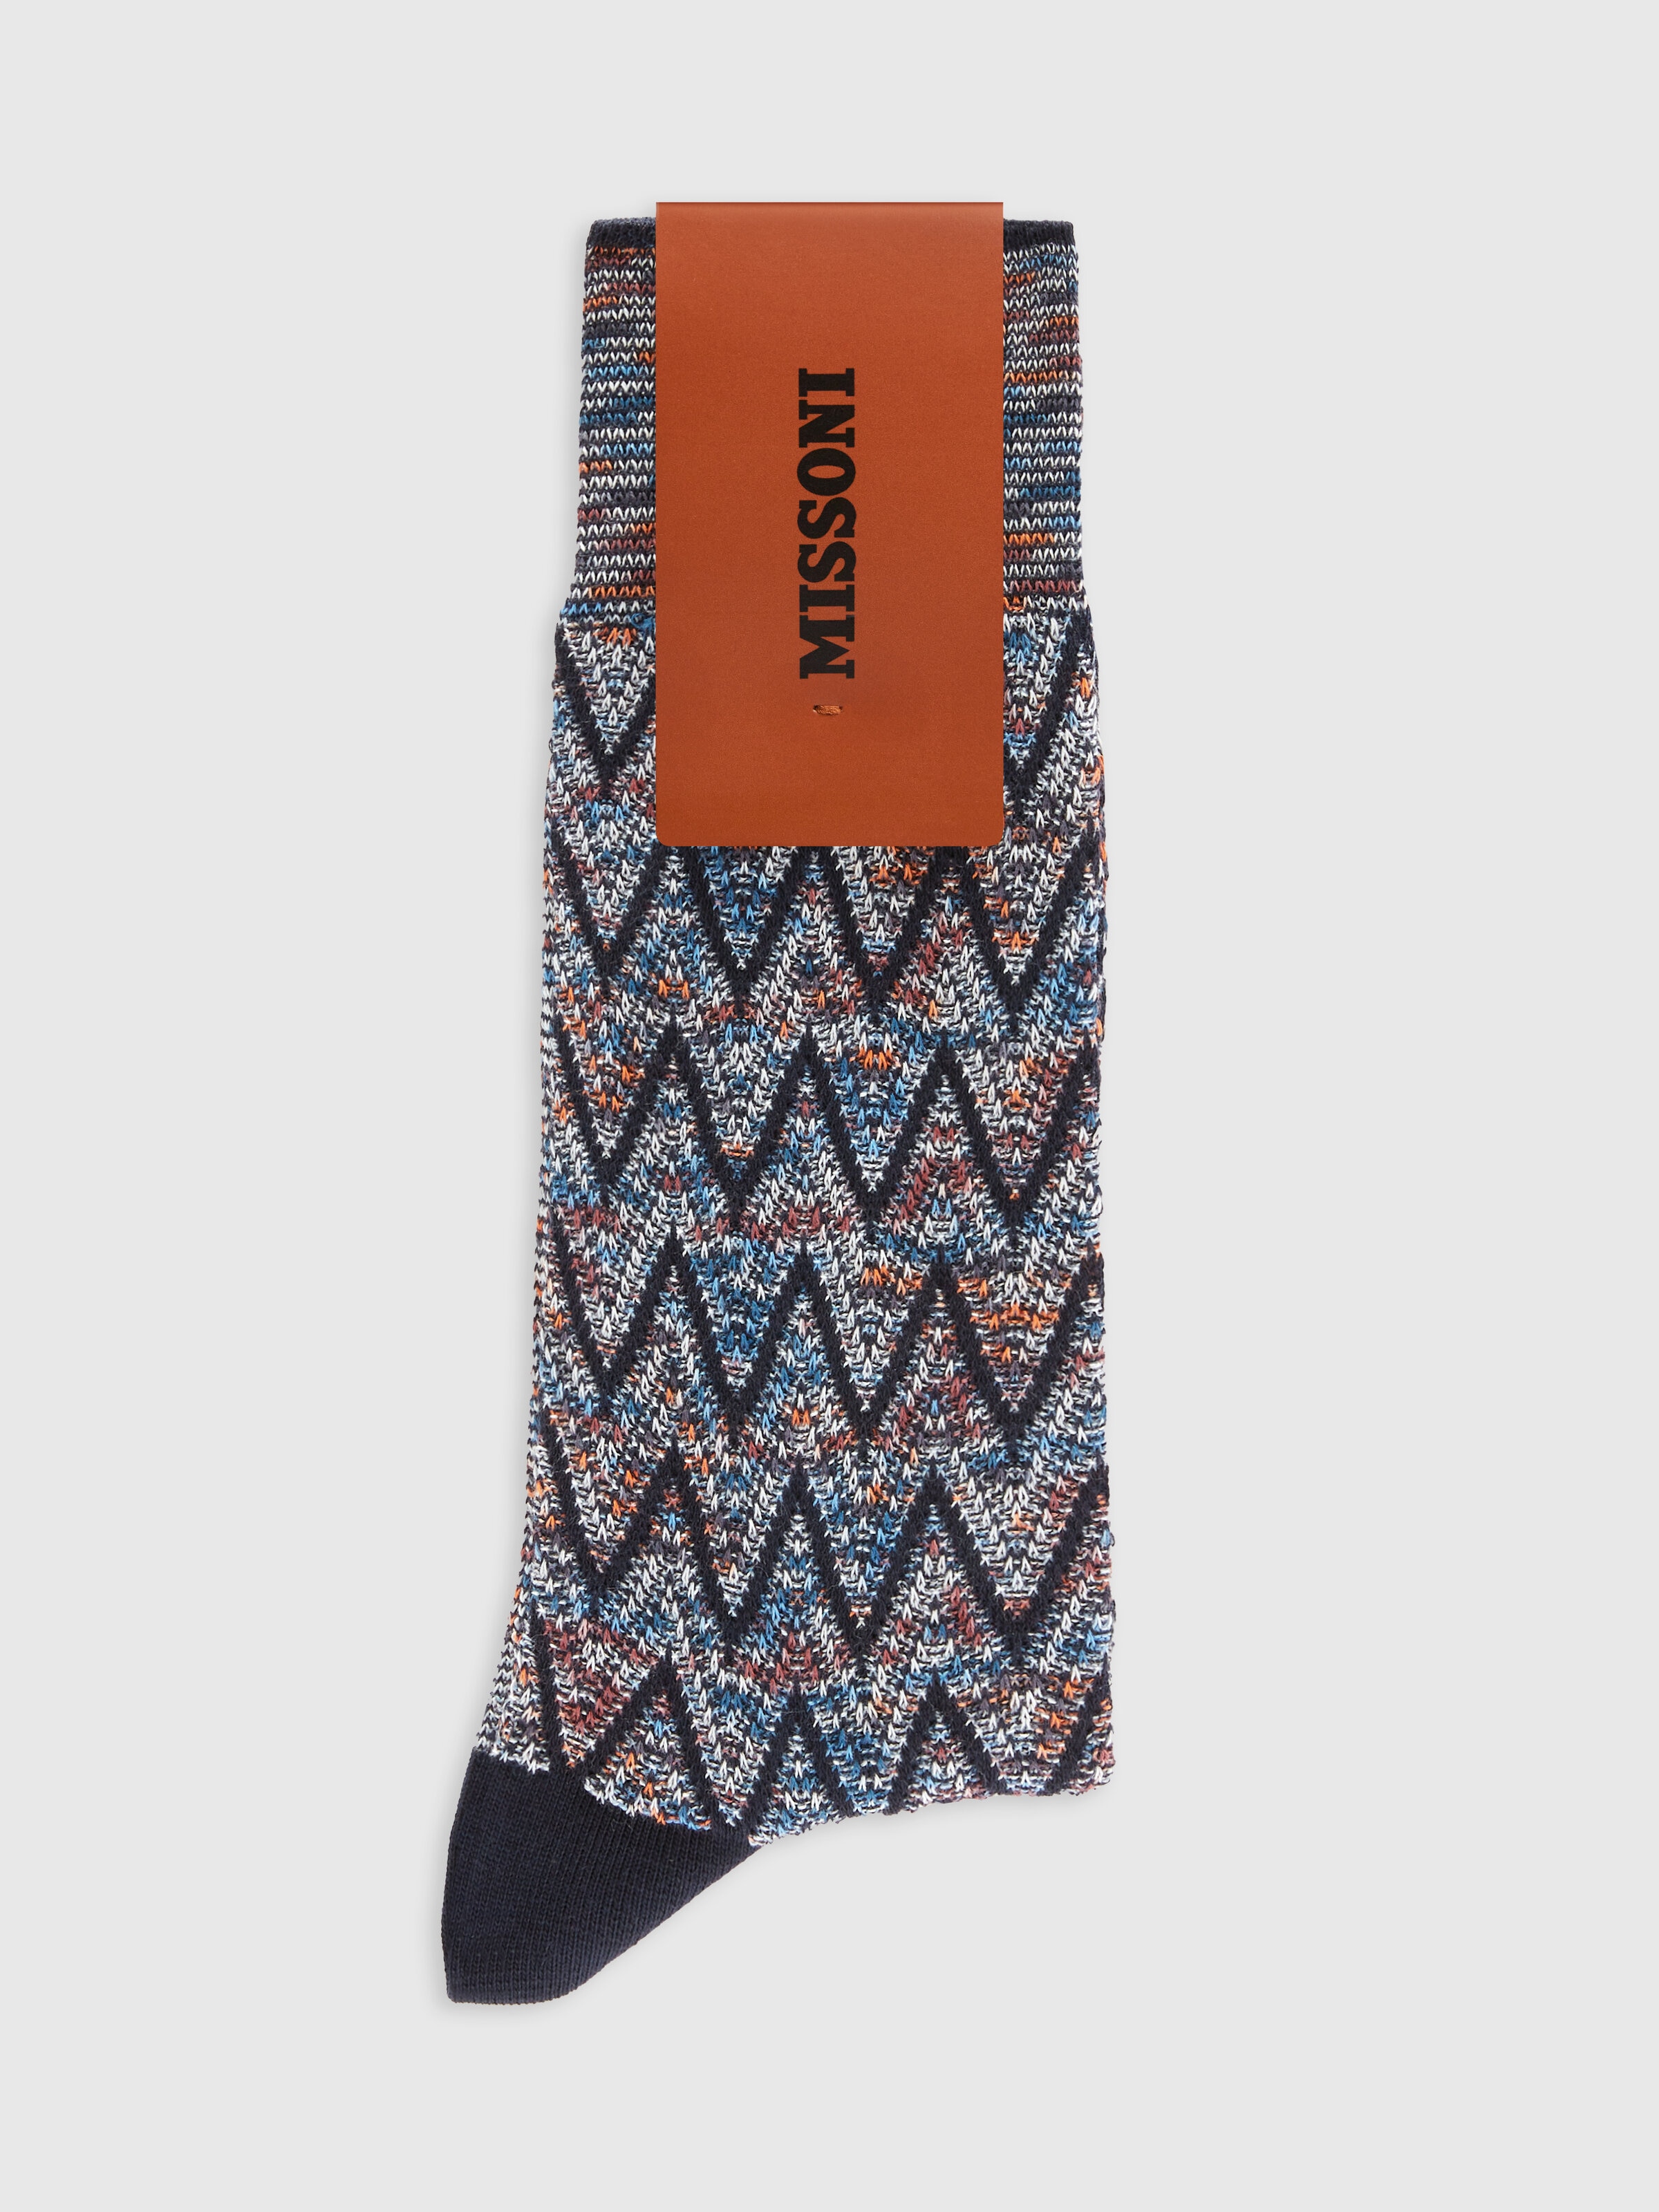 Zigzag cotton blend short socks, Multicoloured  - 1